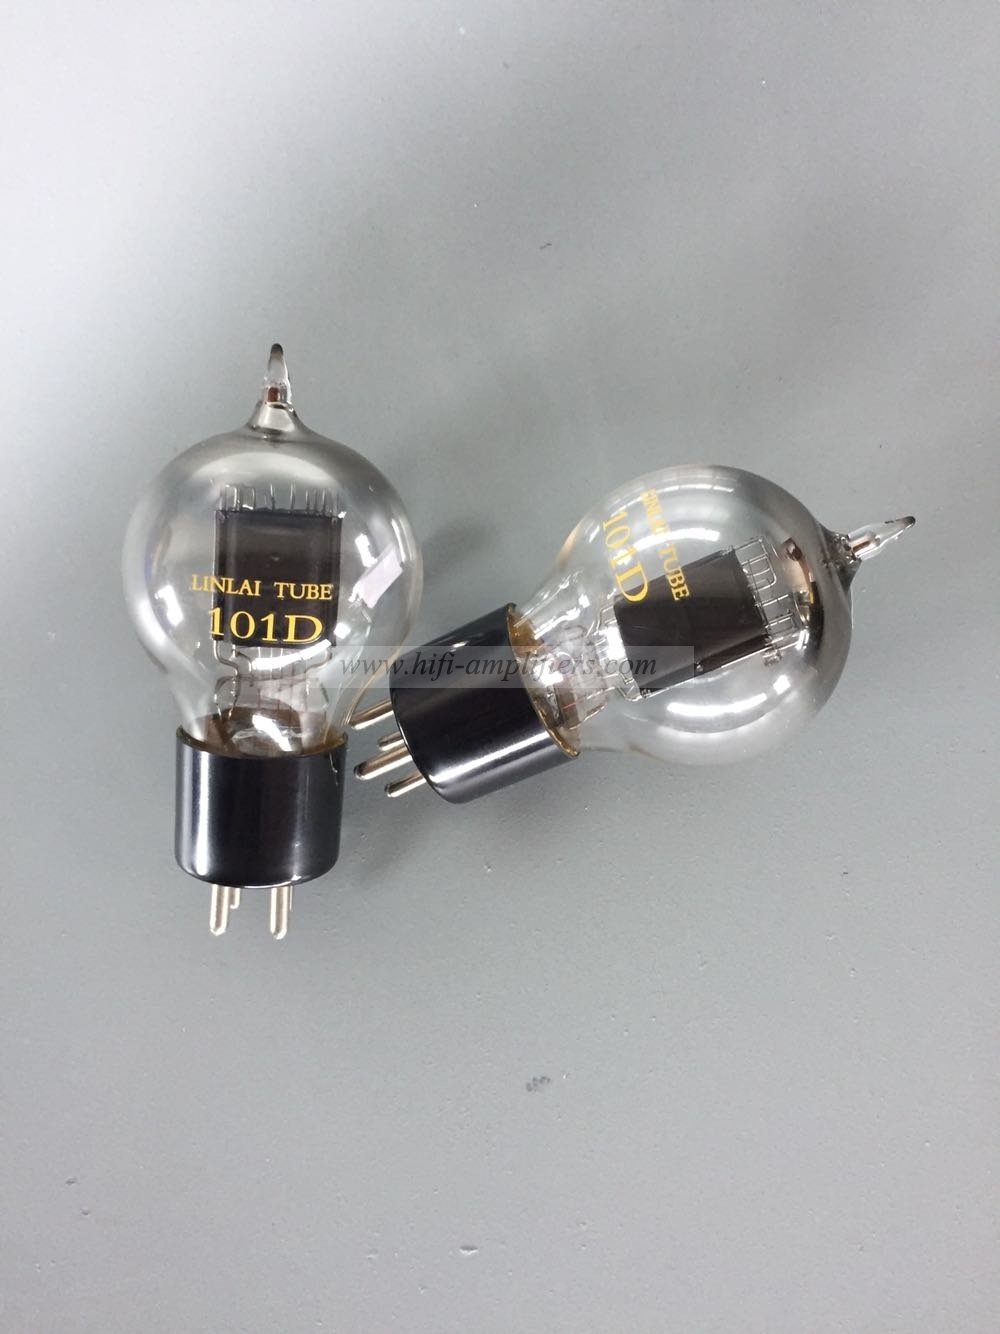 LINLAI 101D 진공관 HIFI 오디오 밸브는 WE101D E-101D 전자 튜브 일치 쌍을 대체합니다.